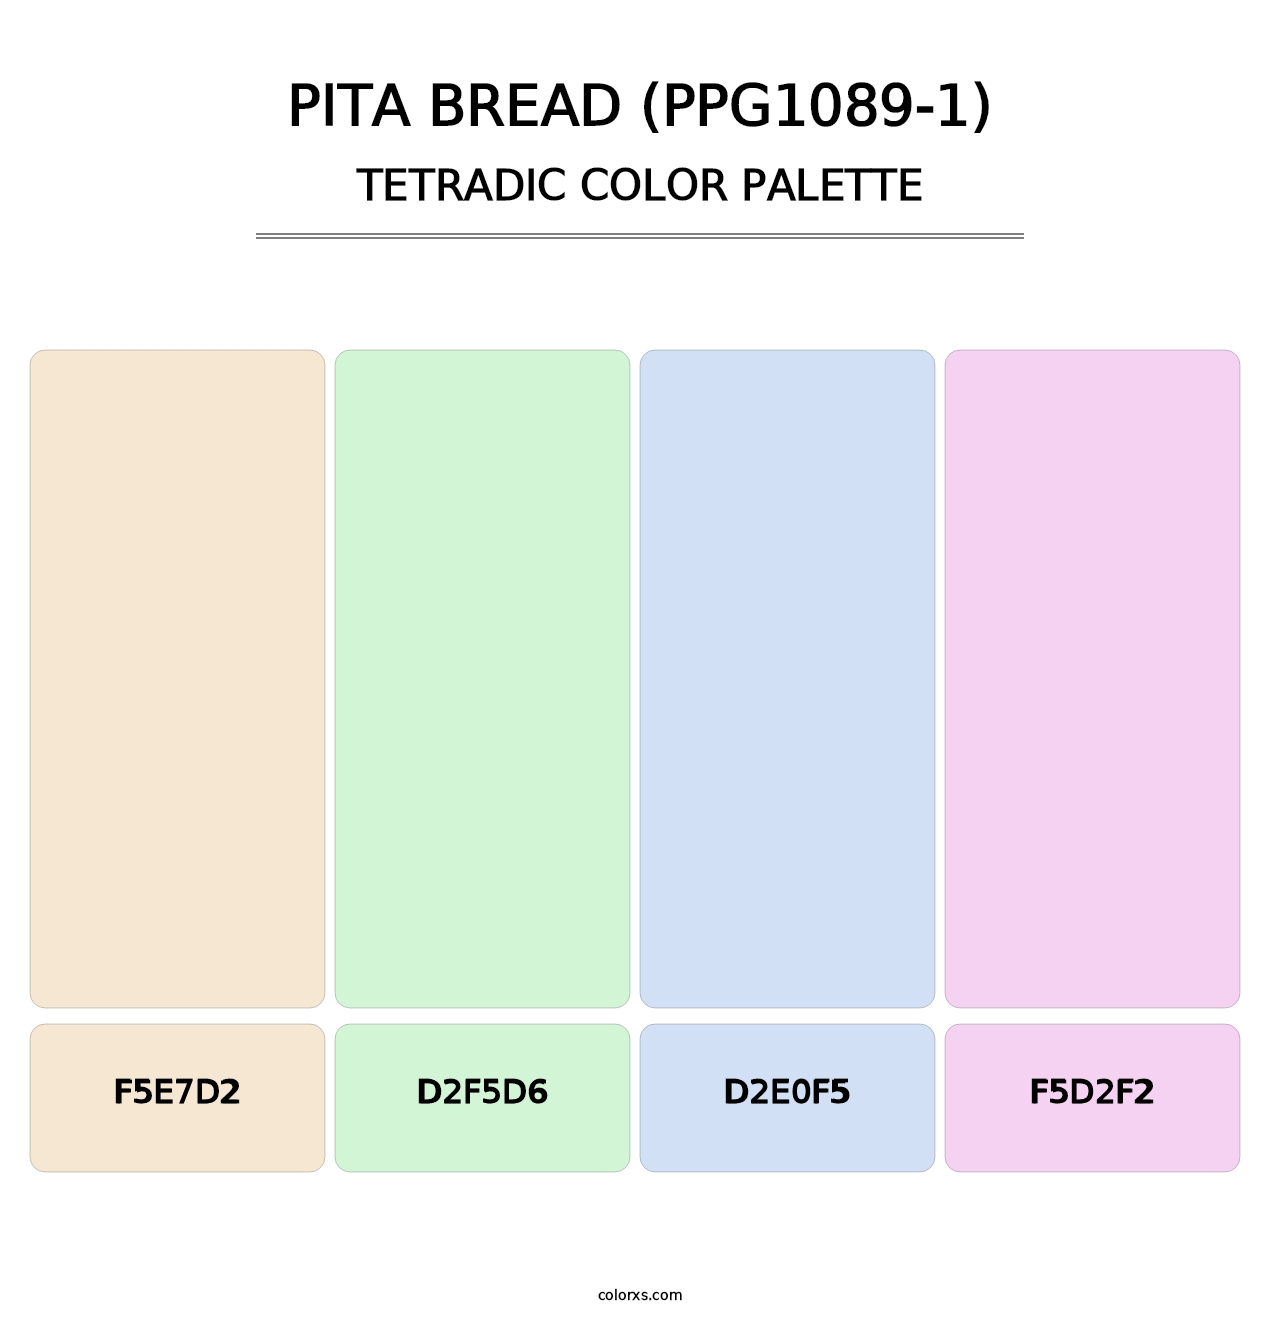 Pita Bread (PPG1089-1) - Tetradic Color Palette